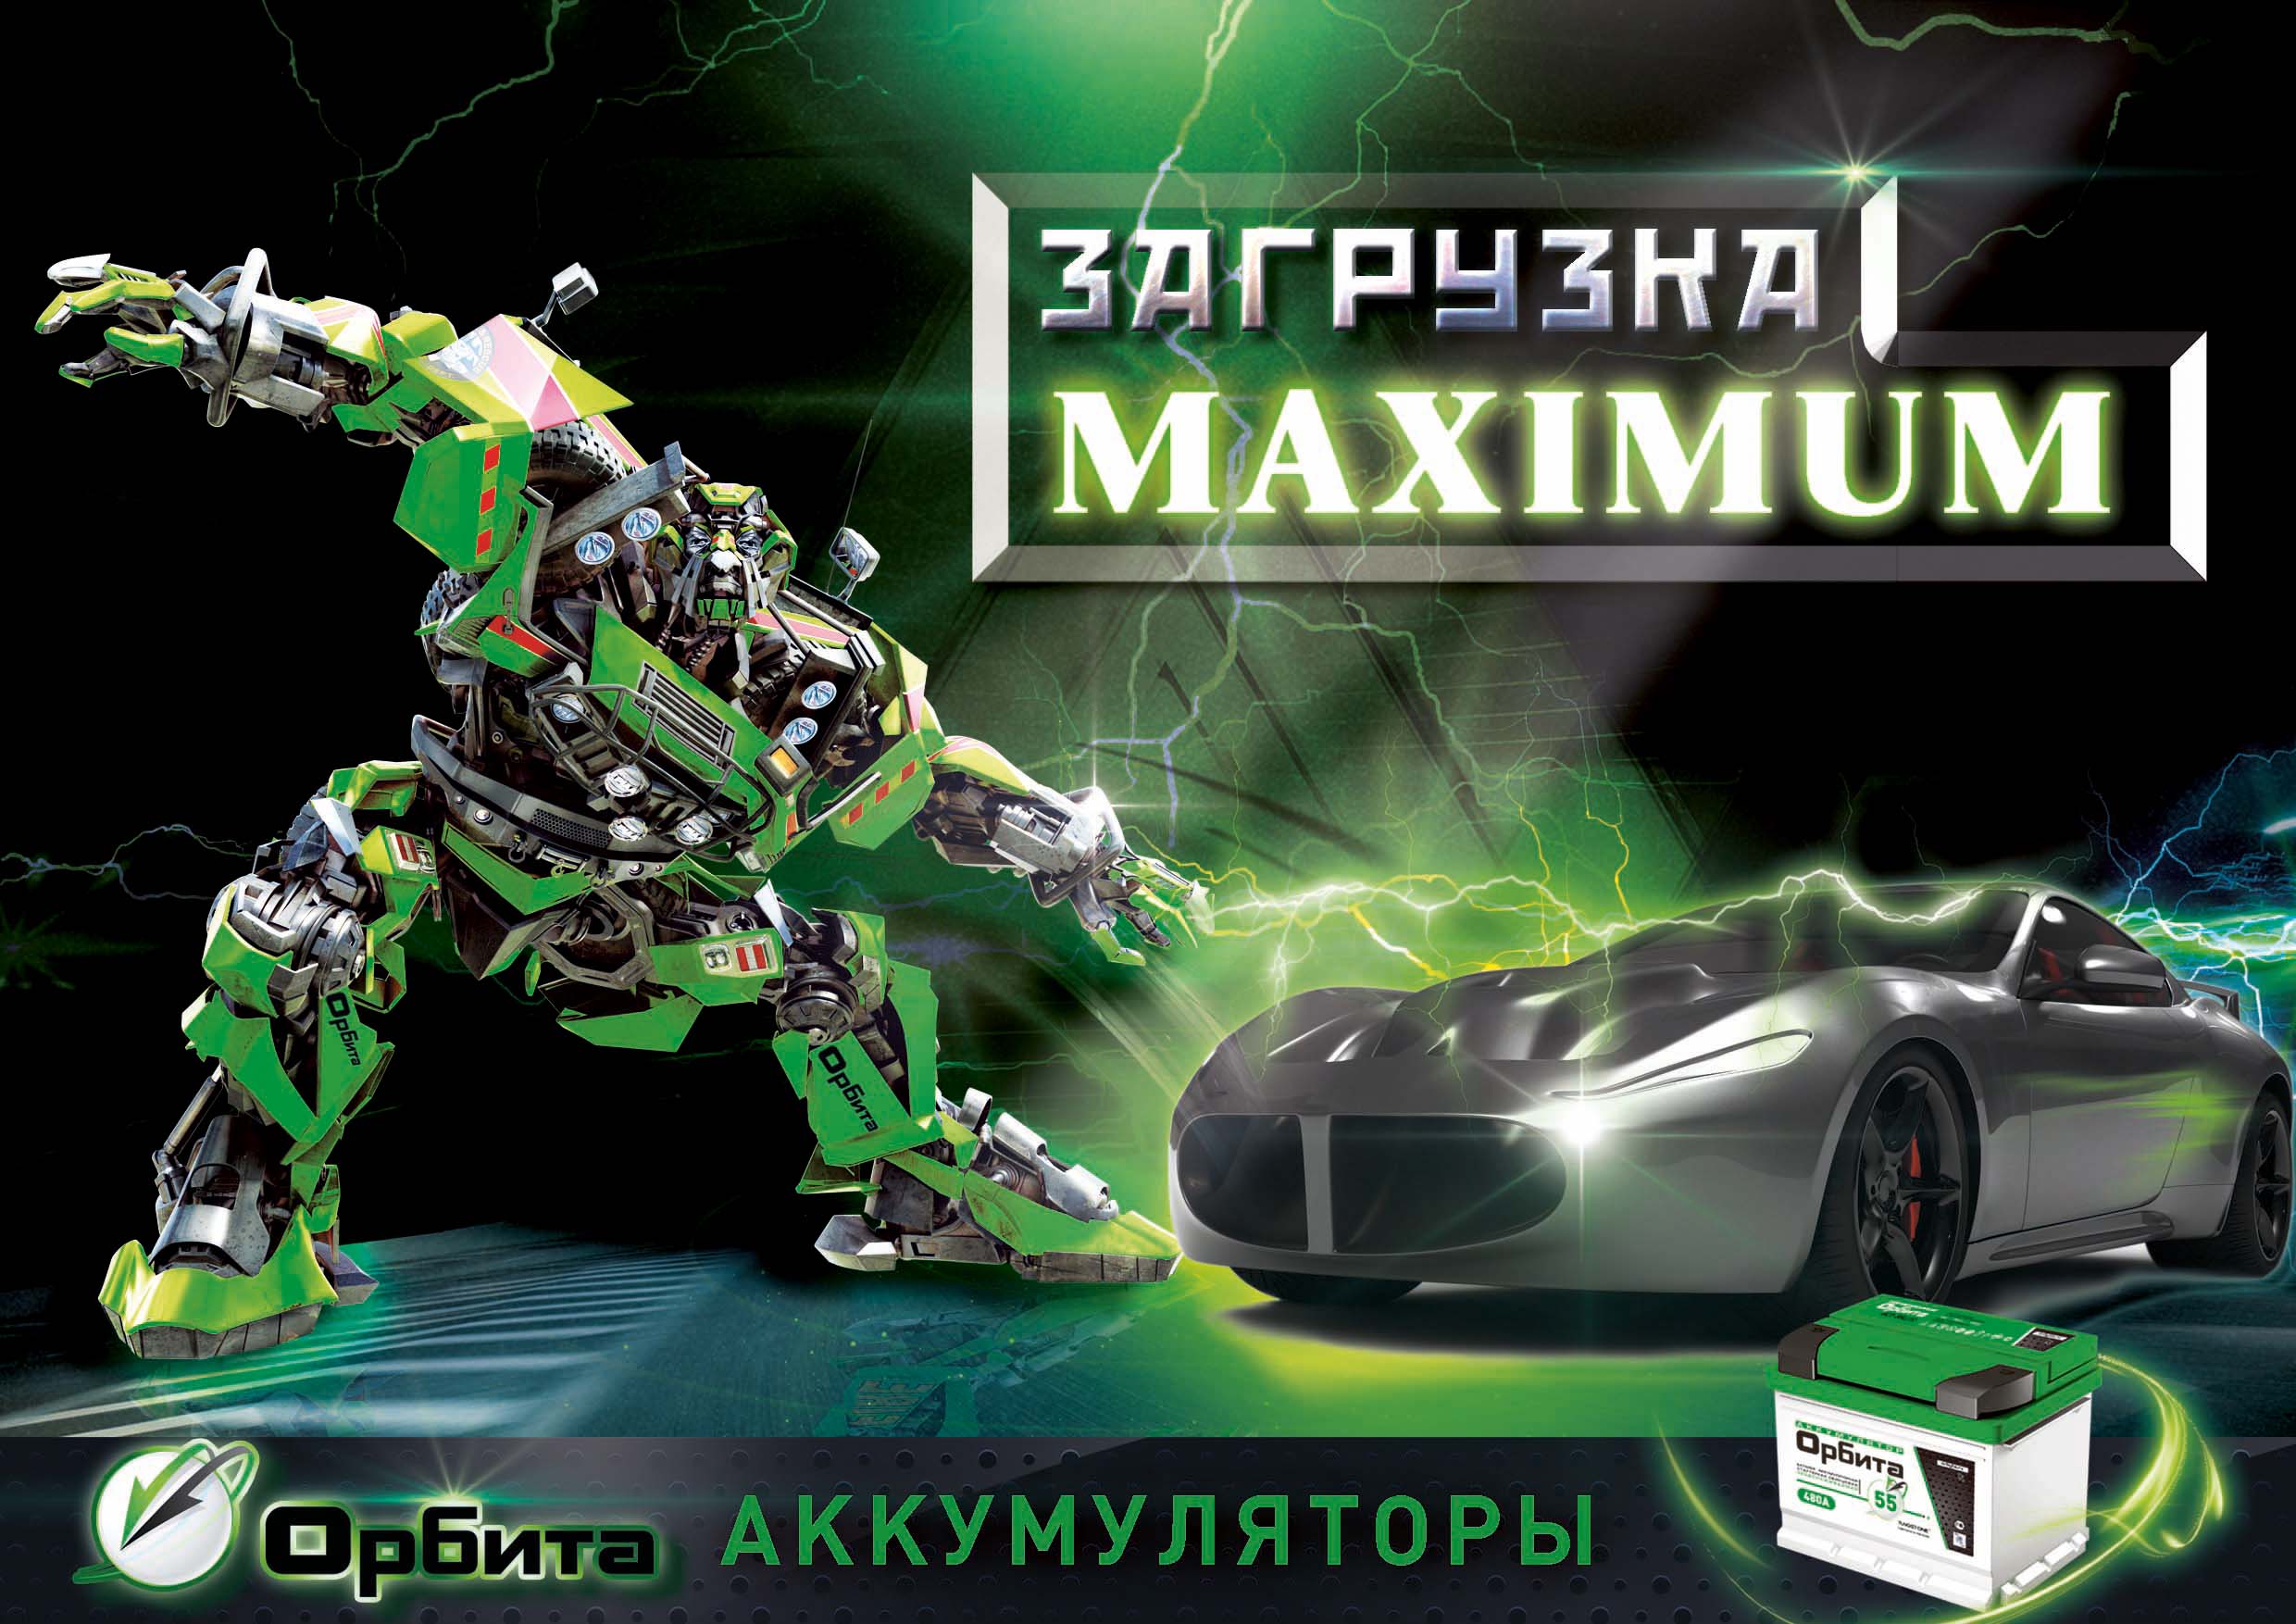 плакат для аккумуляторов авто